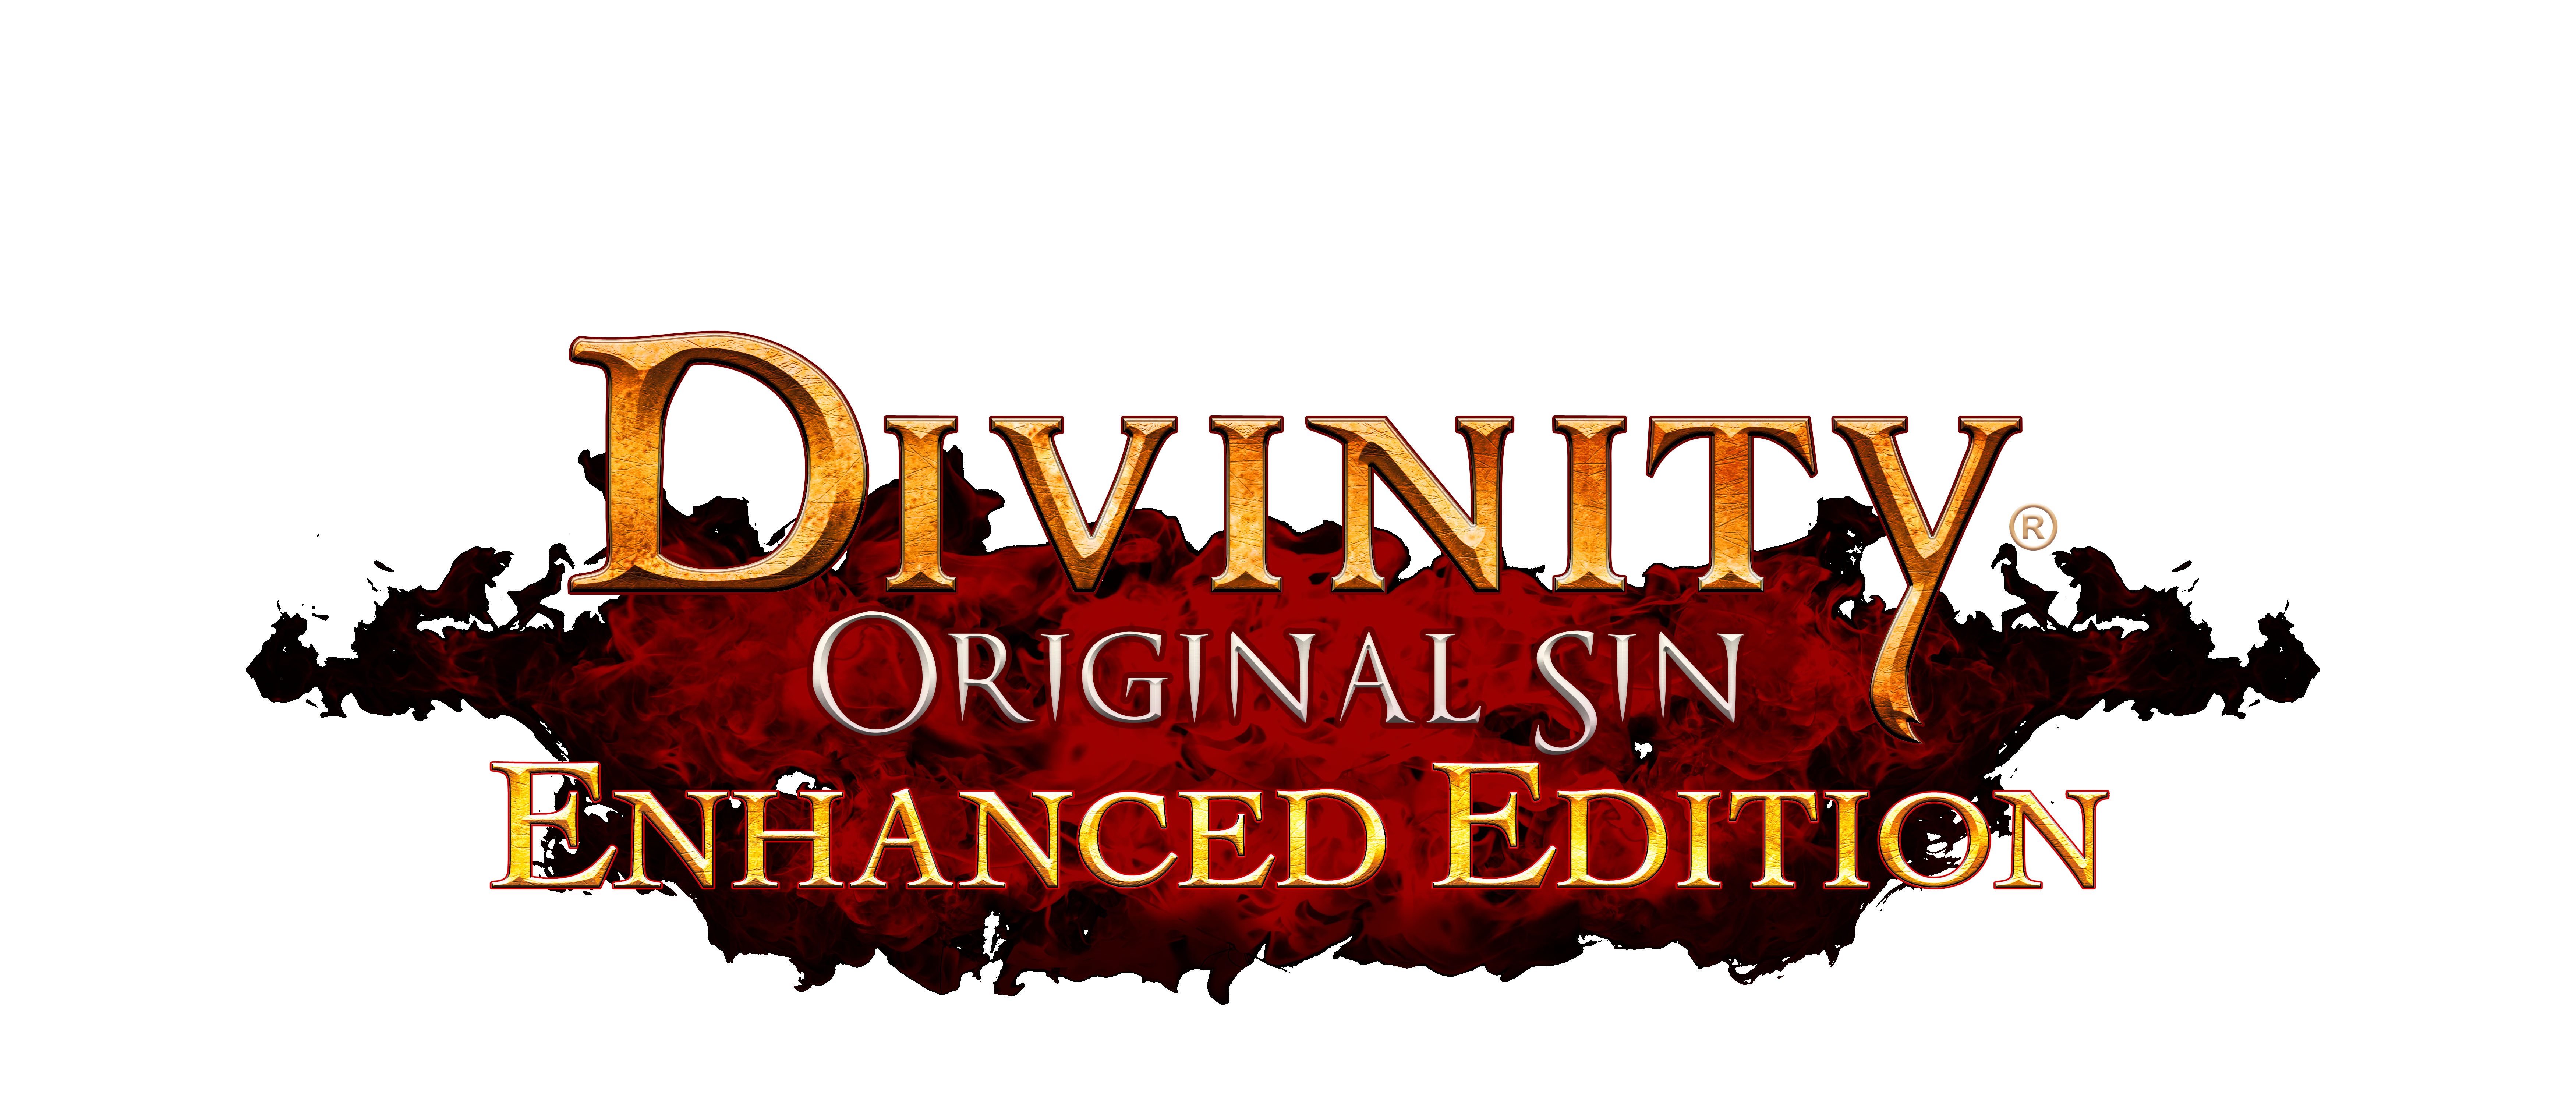 Divinity Original Sin Png - Divinity Original Sin (1), Transparent background PNG HD thumbnail